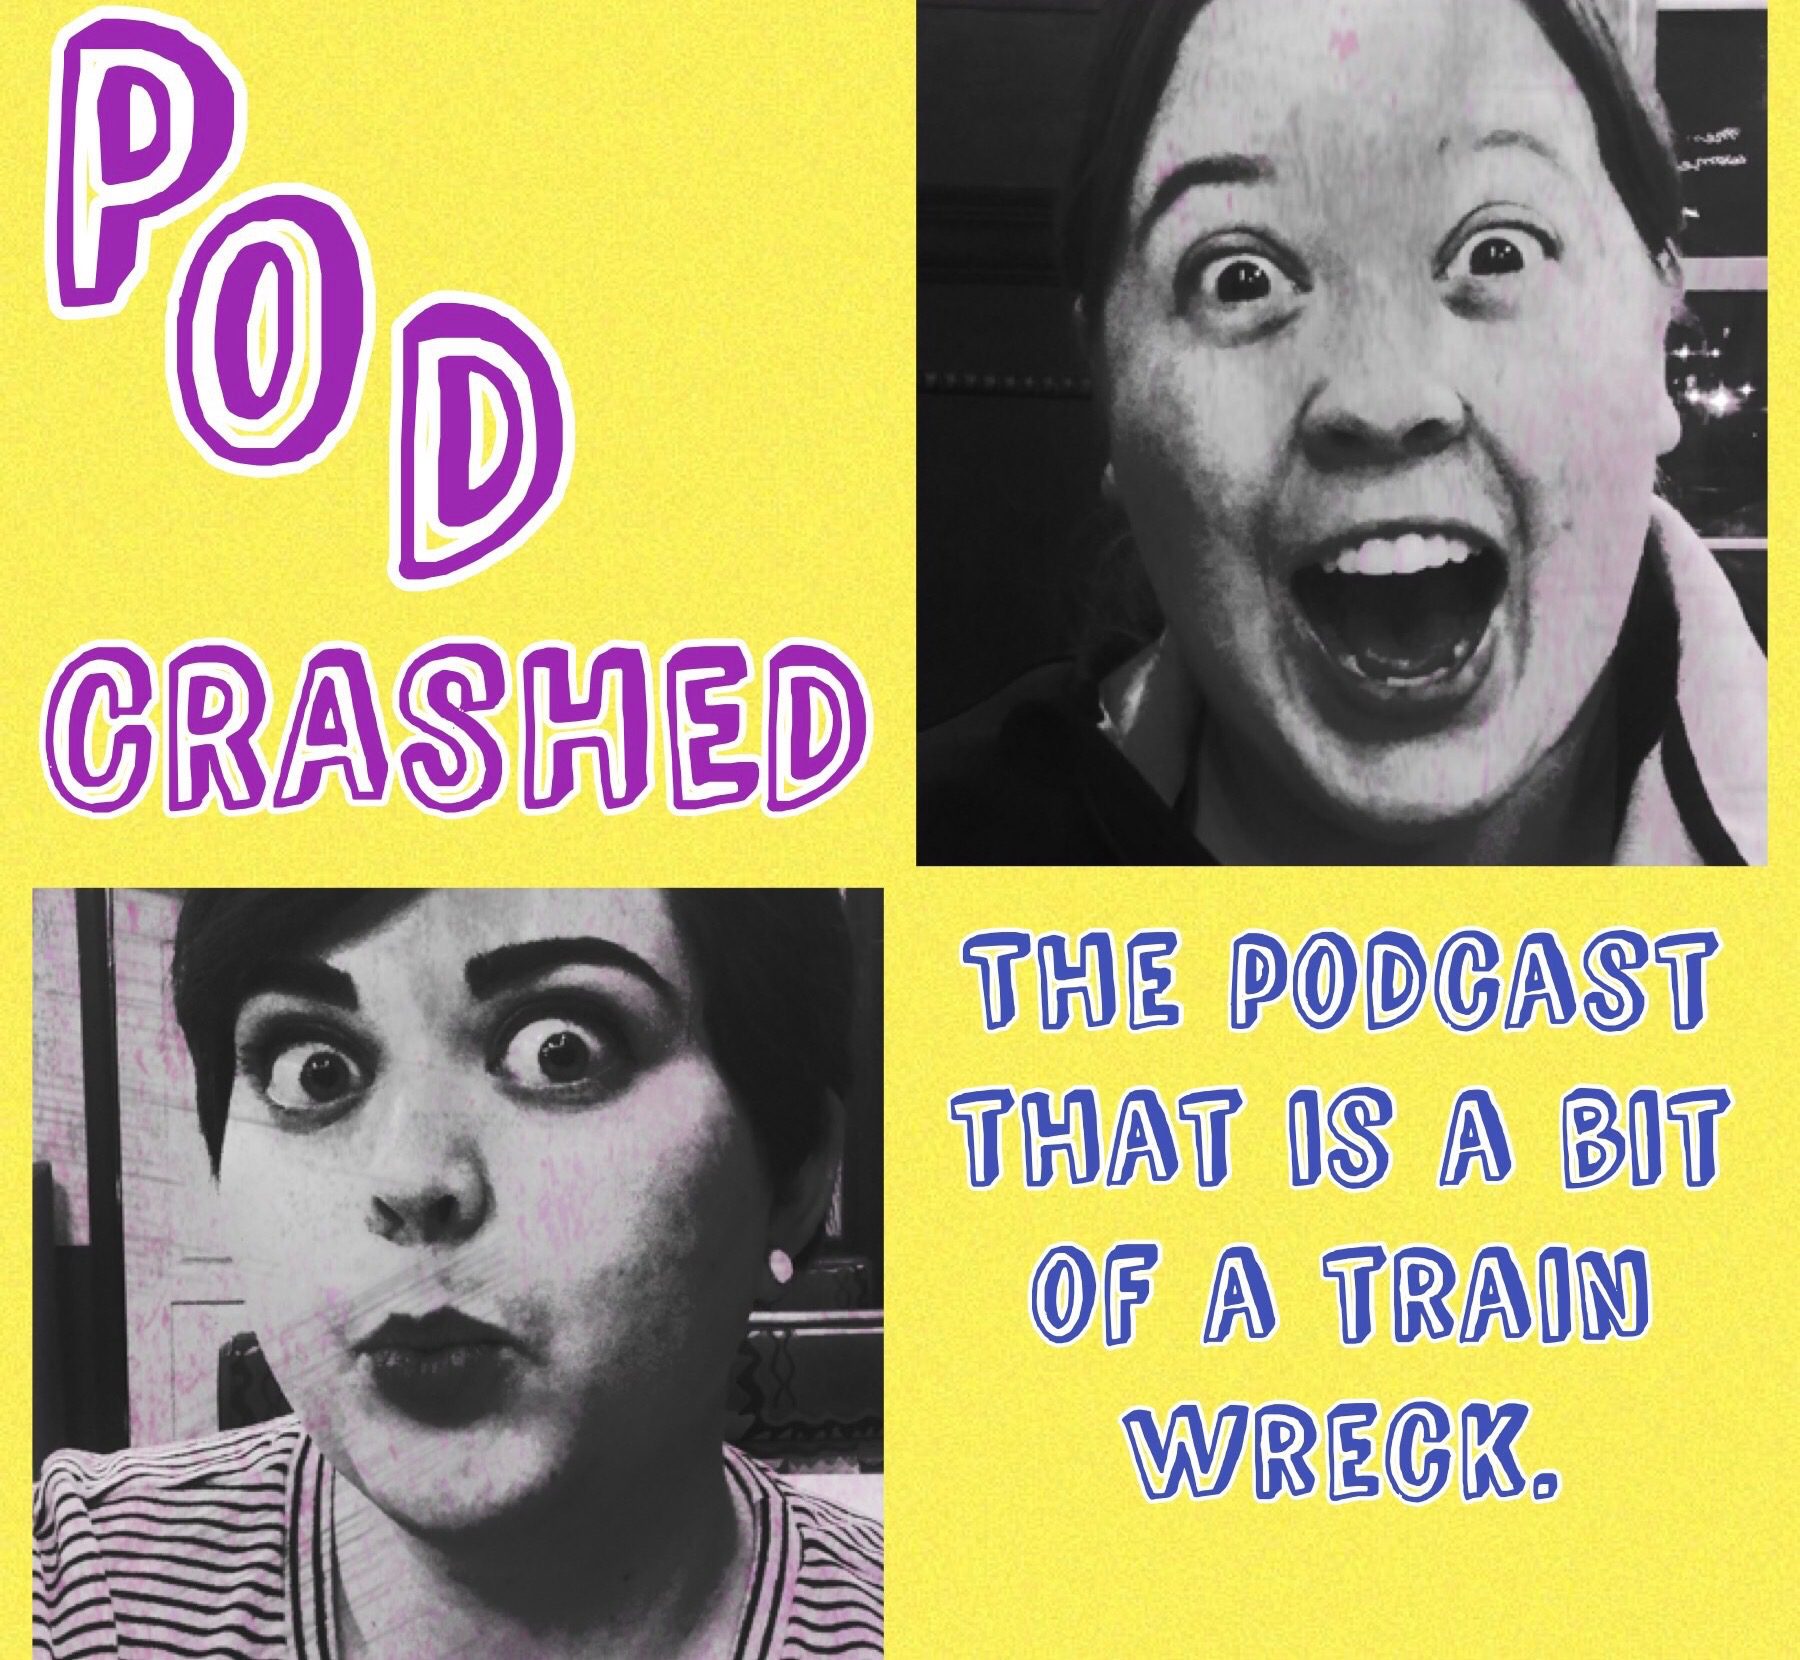 Podcrashed Podcast